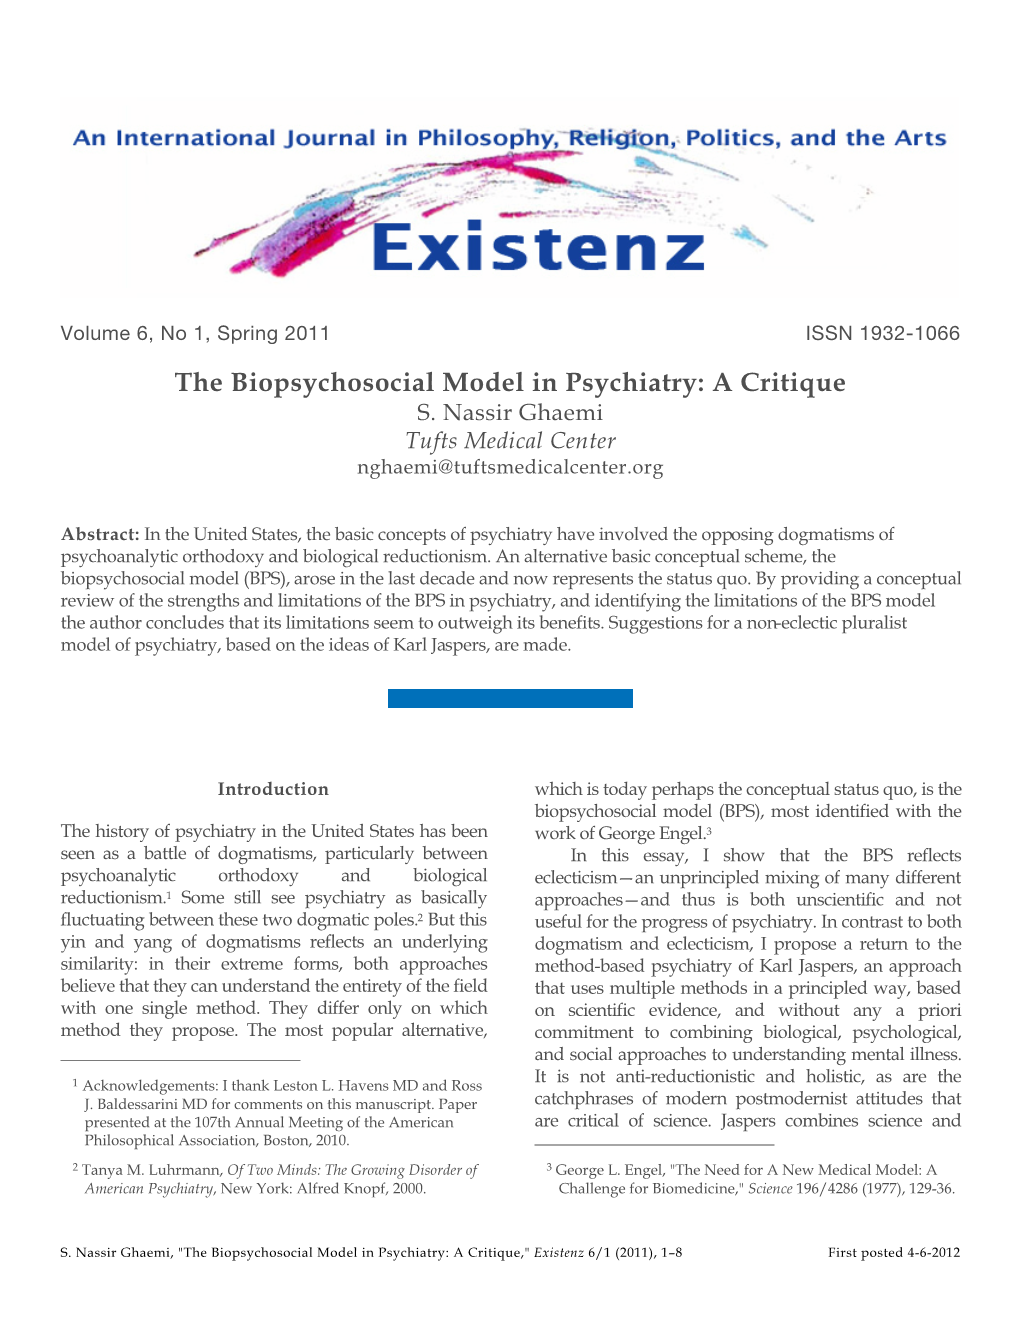 The Biopsychosocial Model in Psychiatry: a Critique S